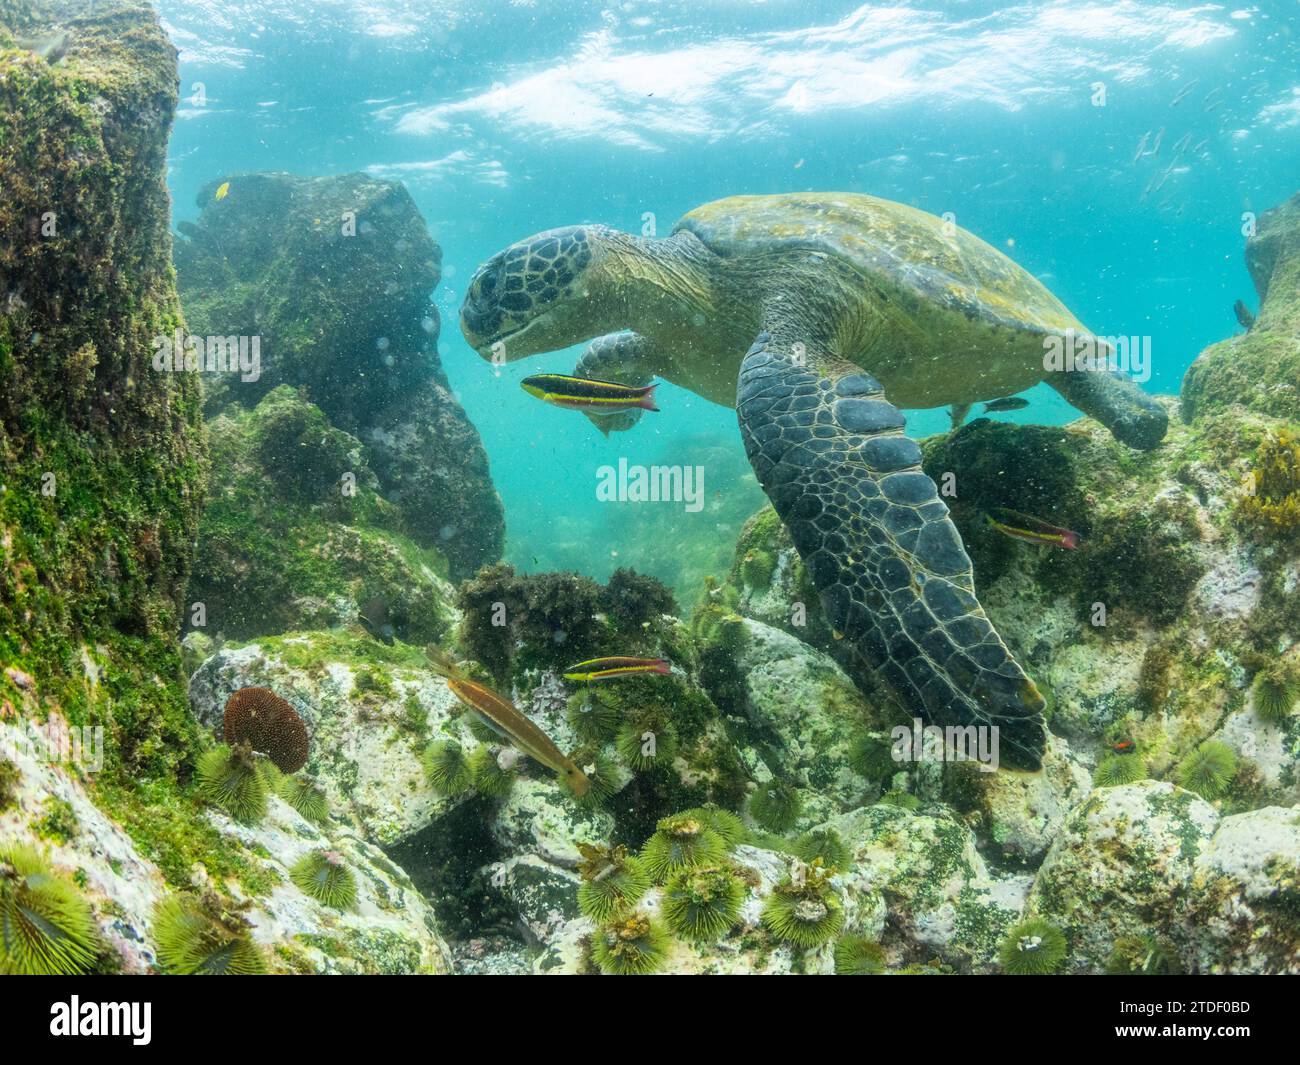 Erwachsene grüne Meeresschildkröte (Chelonia mydas), die Algen in der Nähe von Fernandina Island, Galapagos Inseln, UNESCO-Weltkulturerbe, Ecuador ernährt Stockfoto